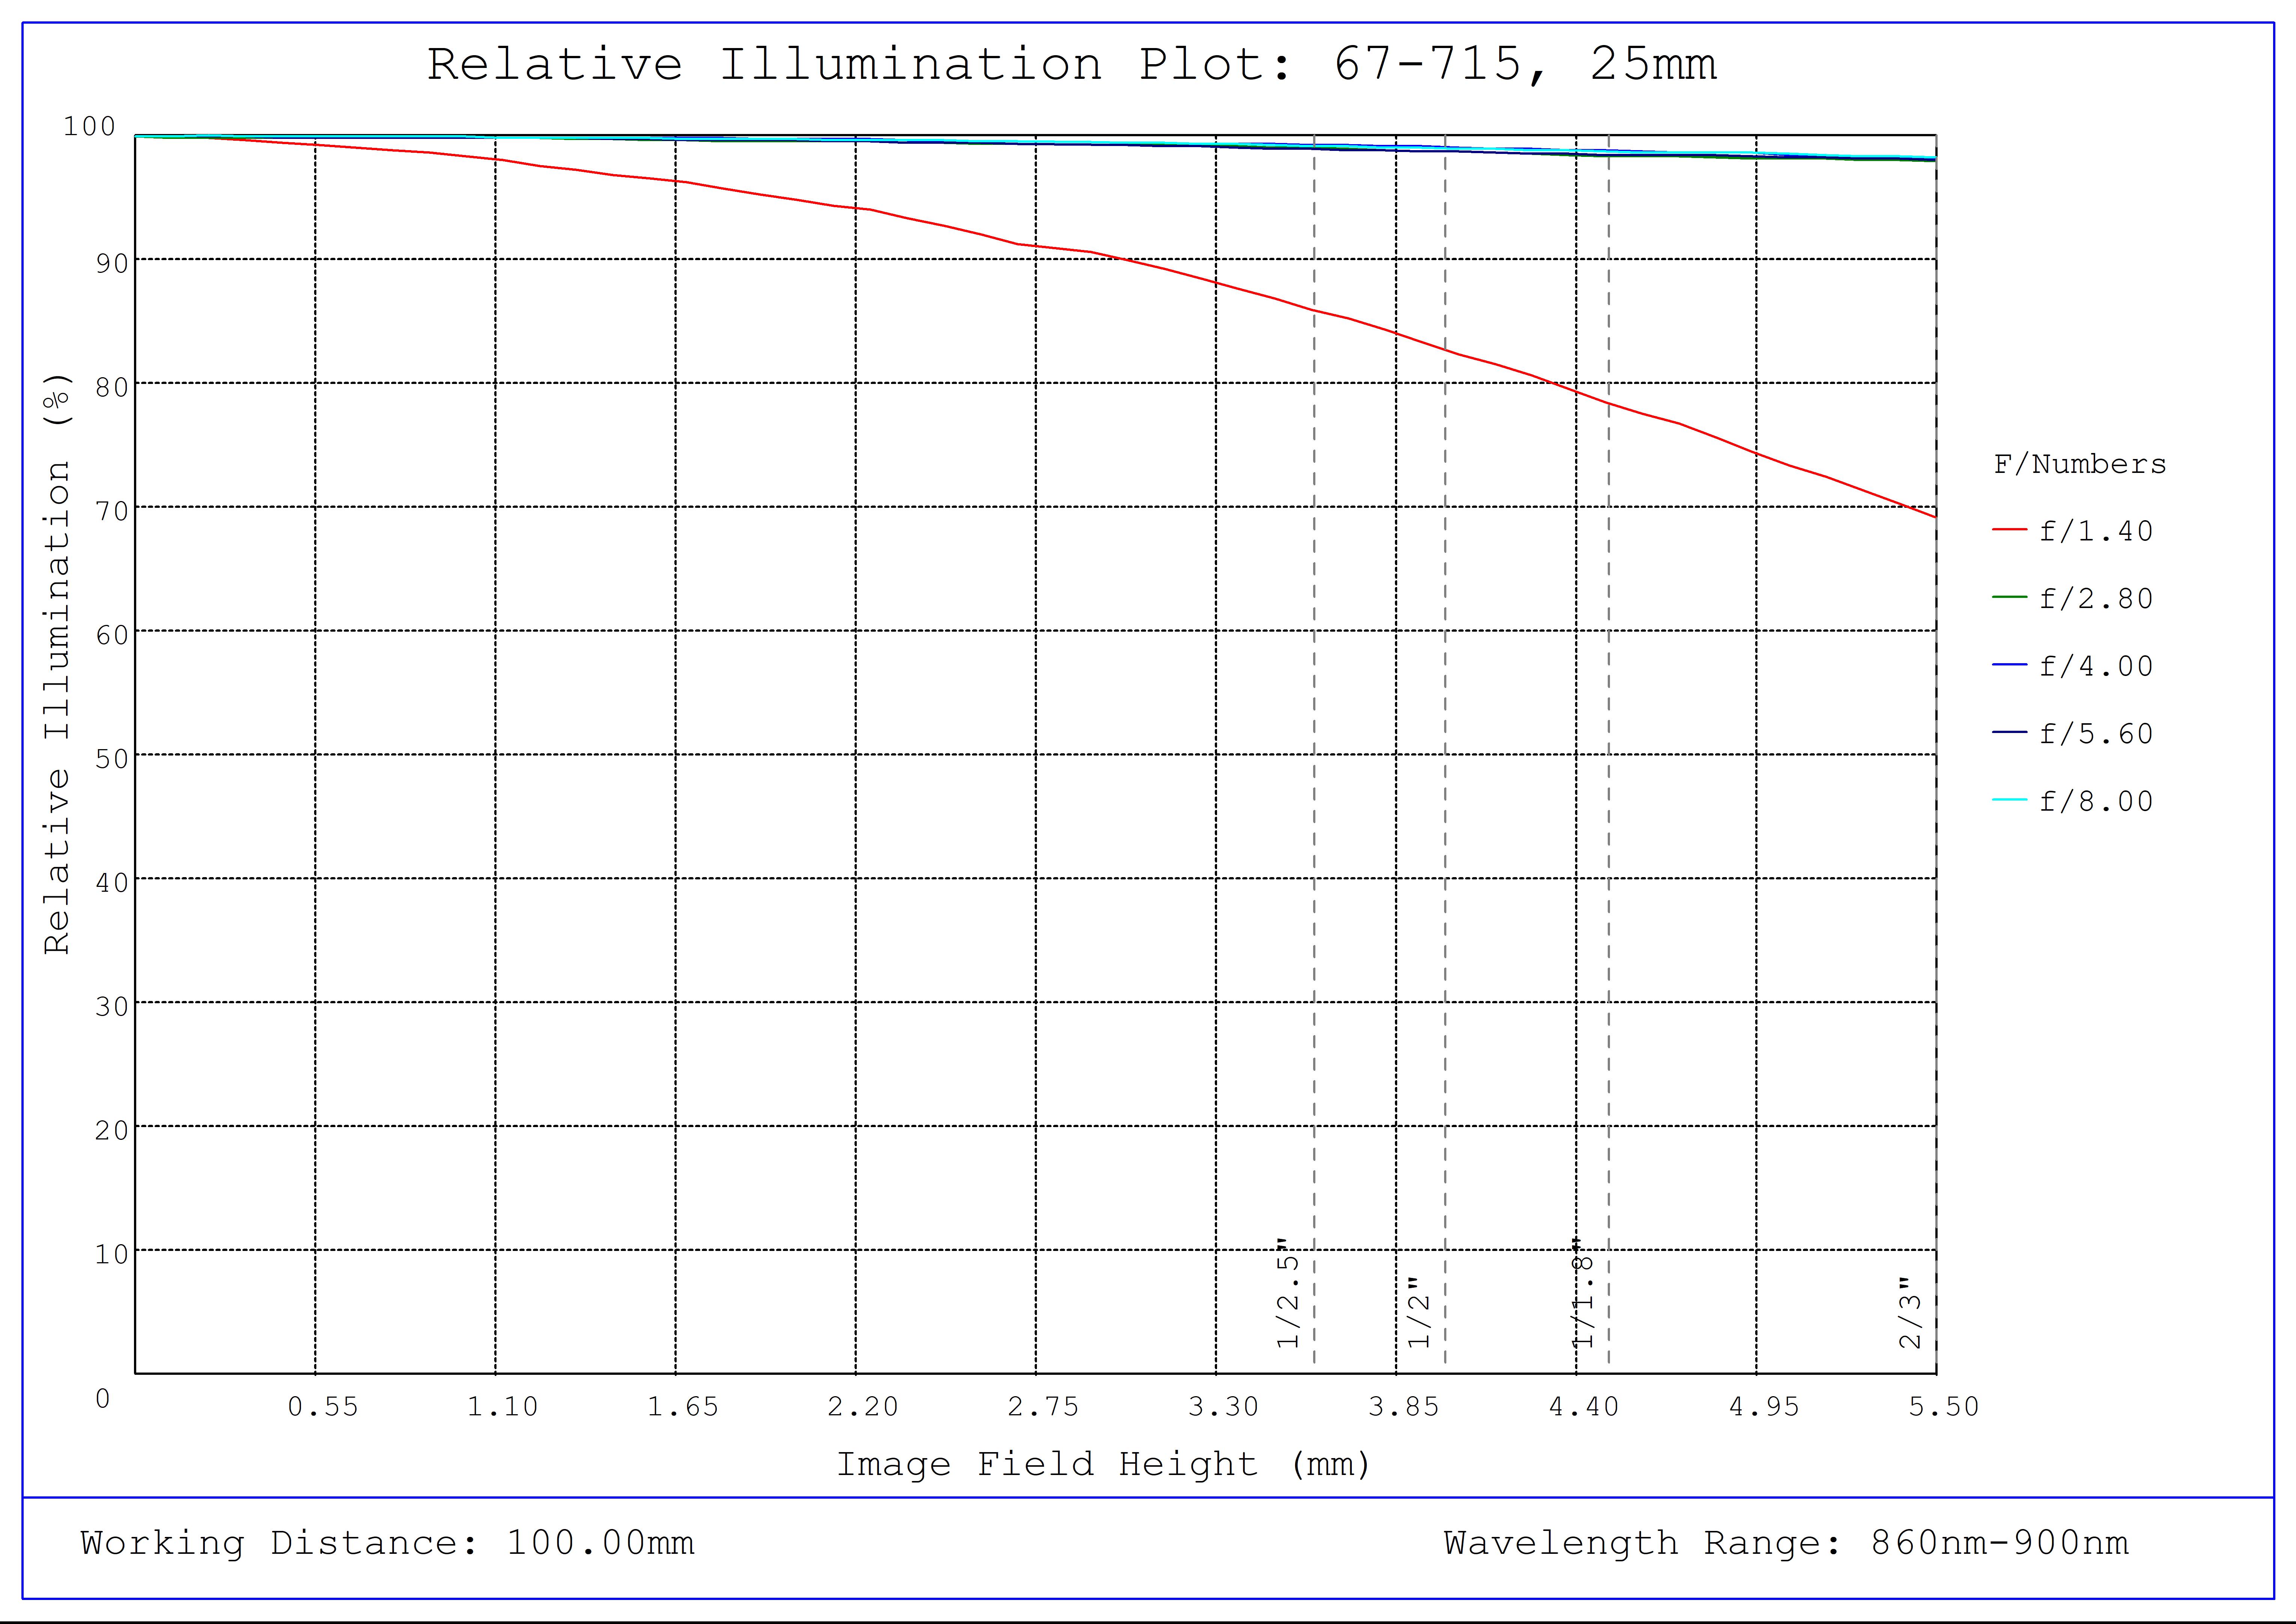 #67-715, 25mm C VIS-NIR Series Fixed Focal Length Lens, Relative Illumination Plot (NIR)